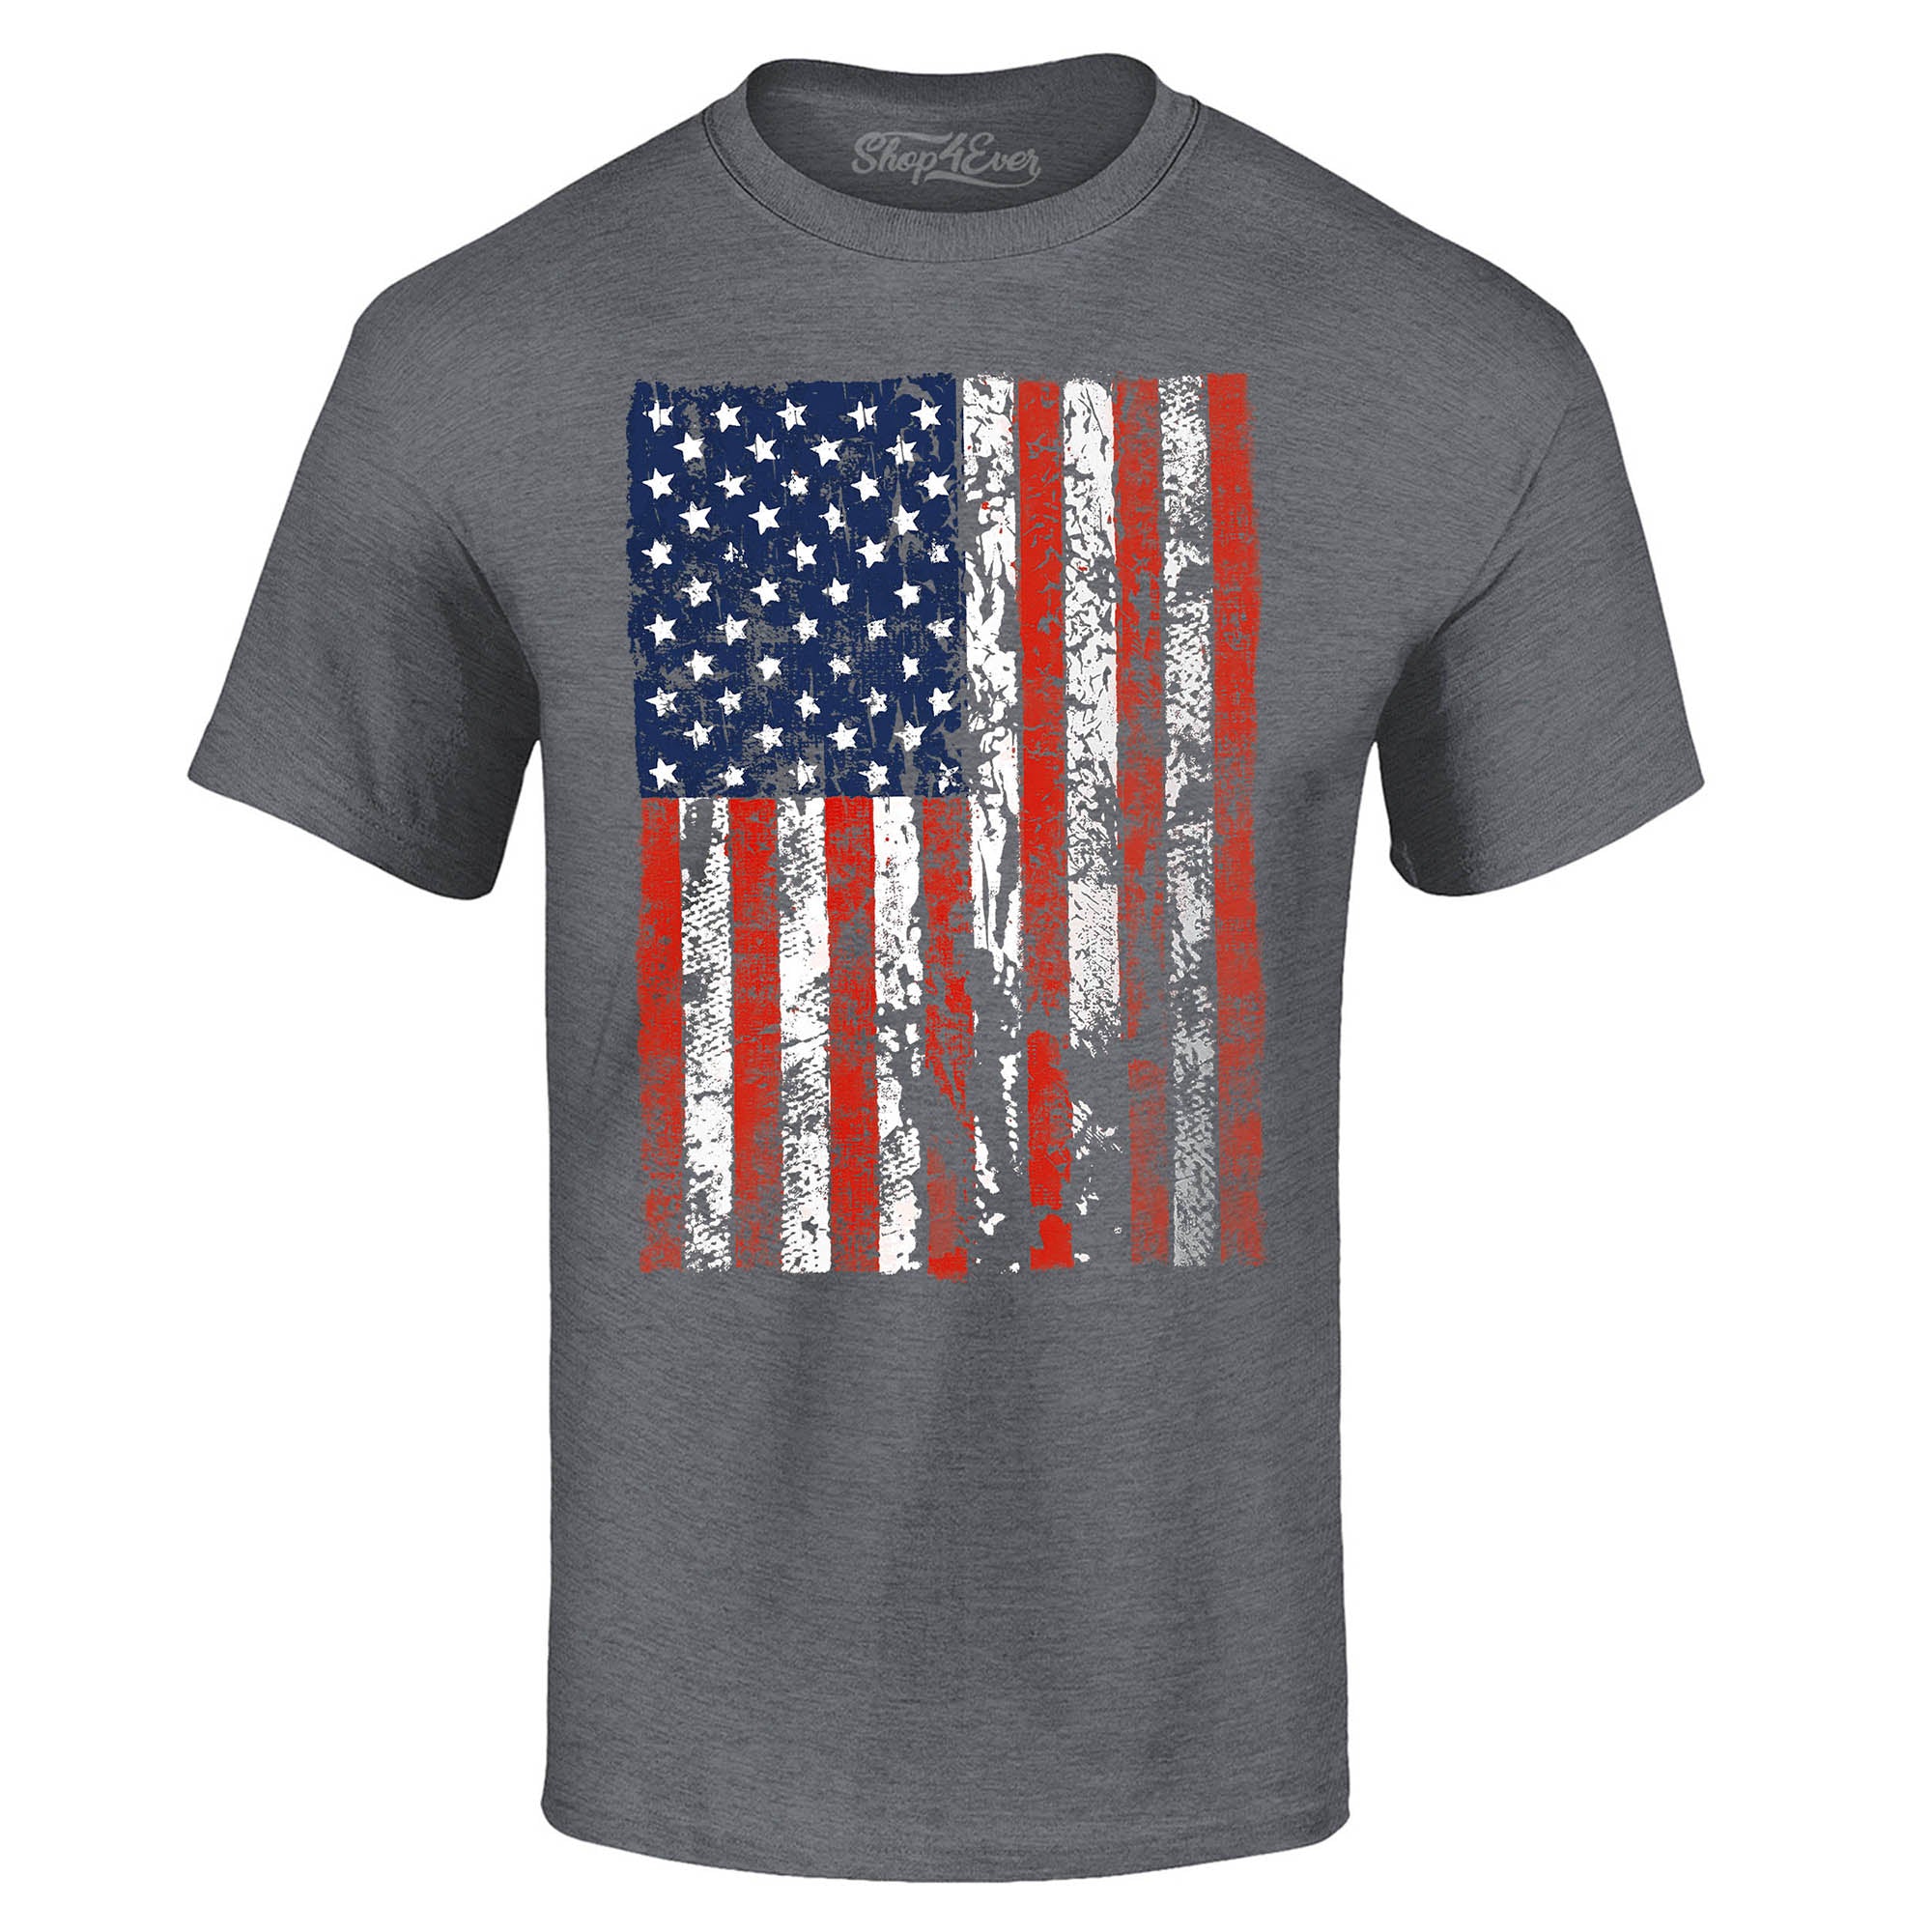 United States of America Flag T-Shirt USA Flag Shirts